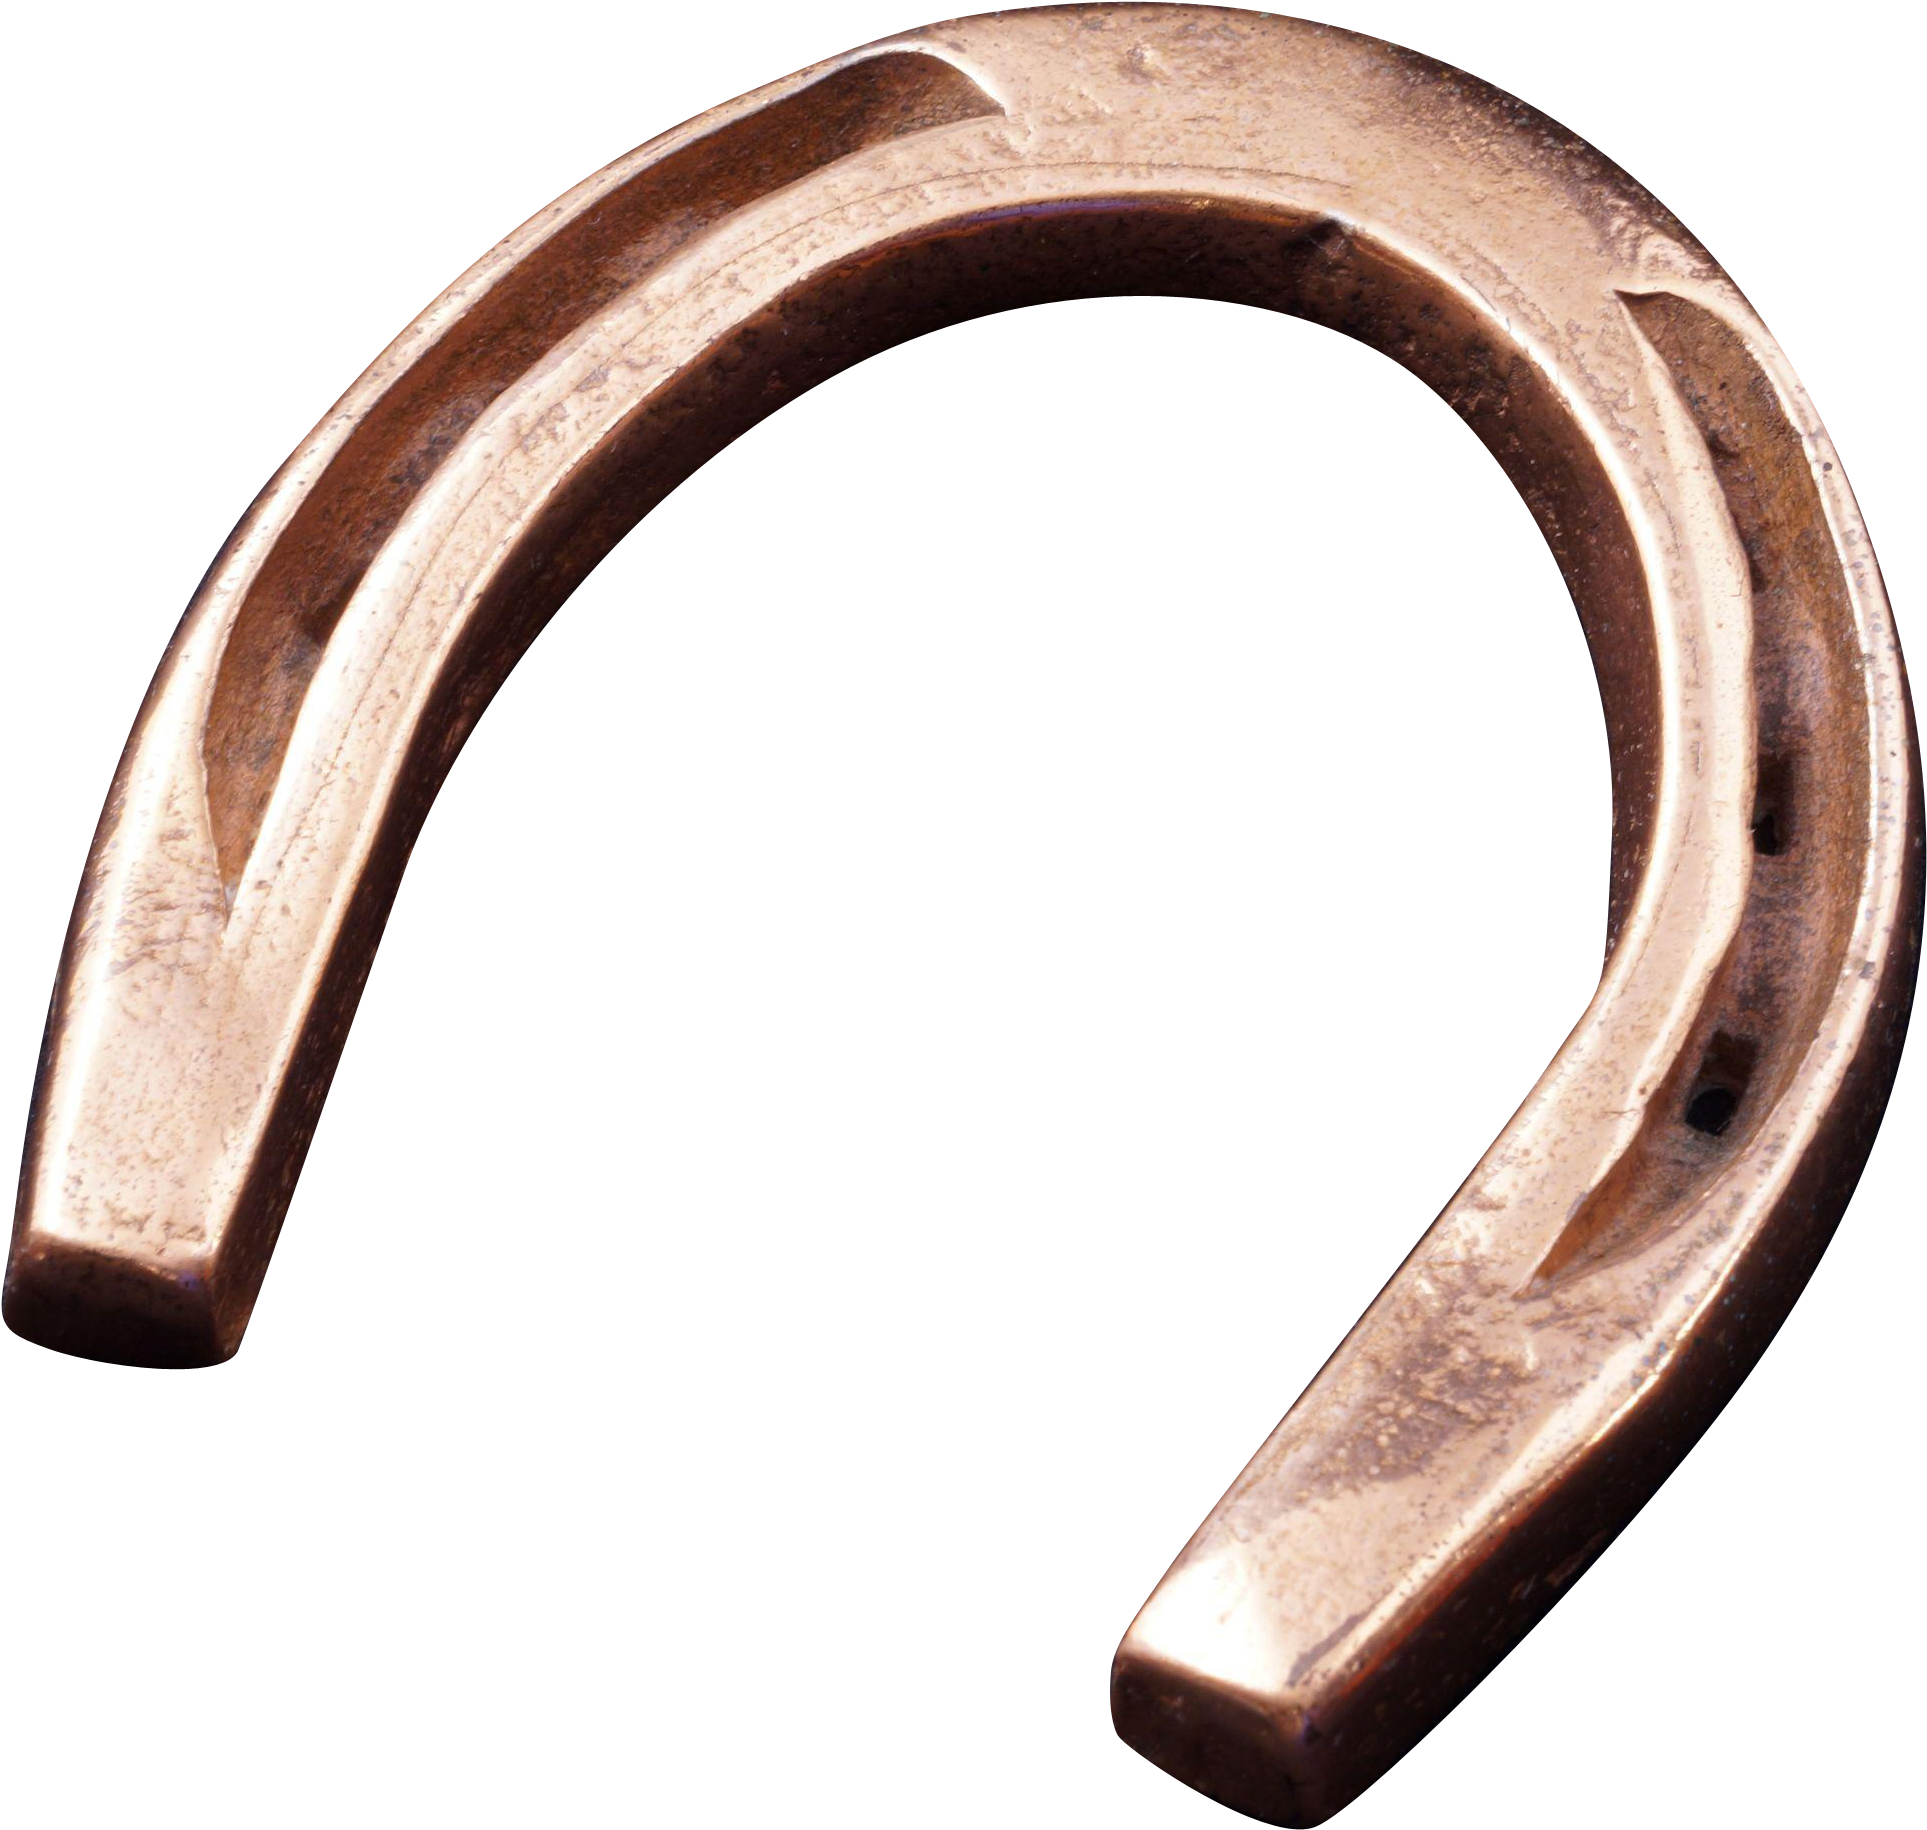 A Close Up Of A Horseshoe